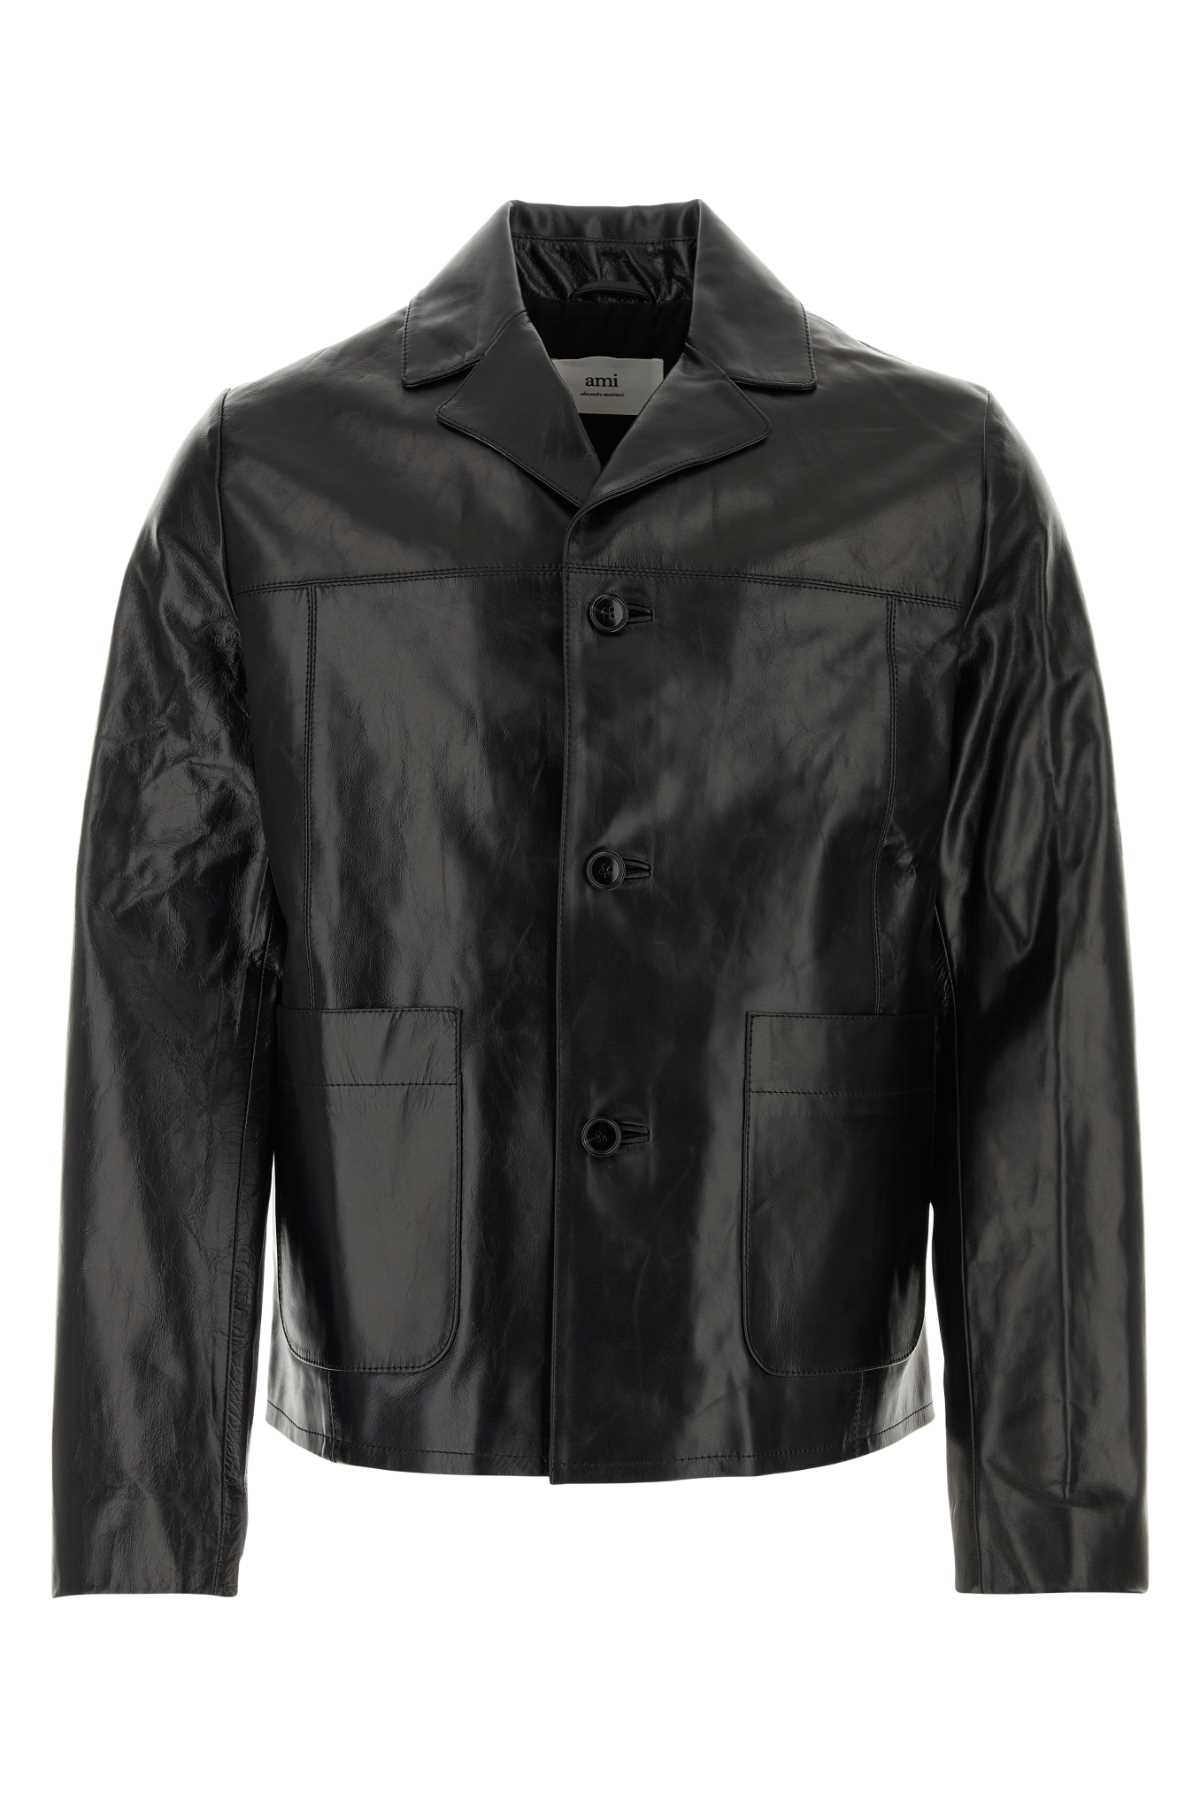 Shop Ami Alexandre Mattiussi Black Leather Jacket